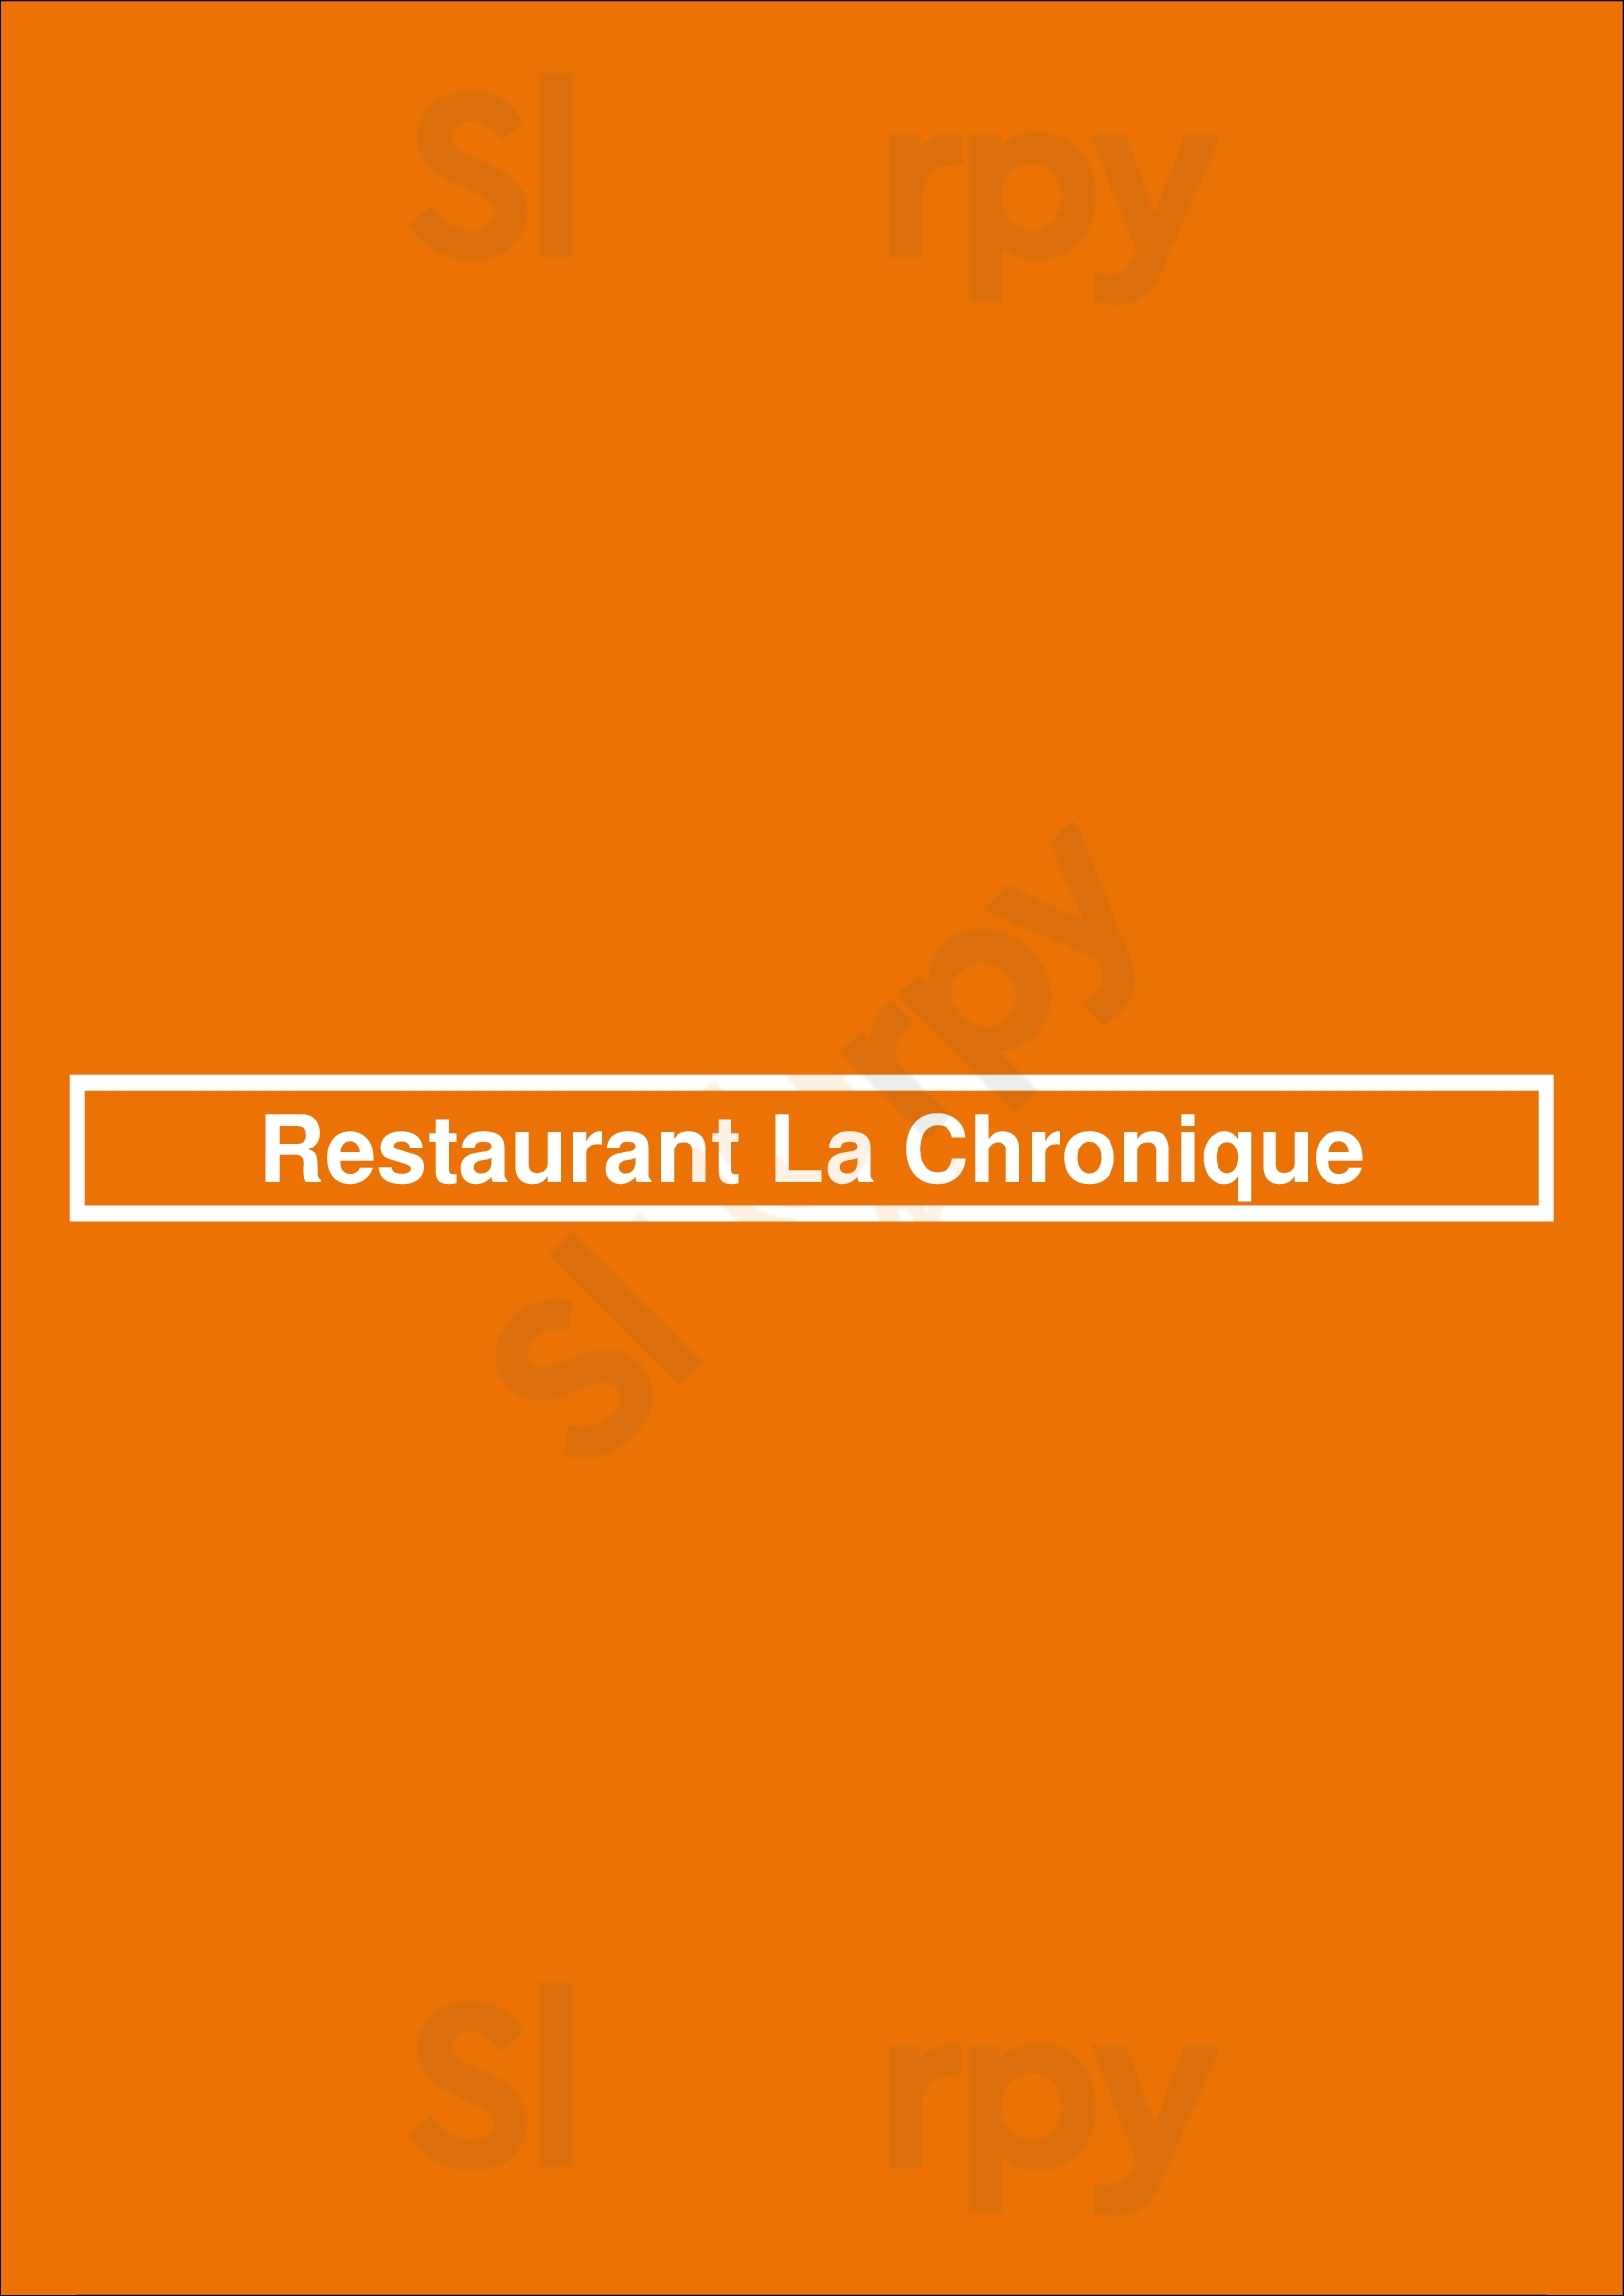 Restaurant La Chronique Montreal Menu - 1